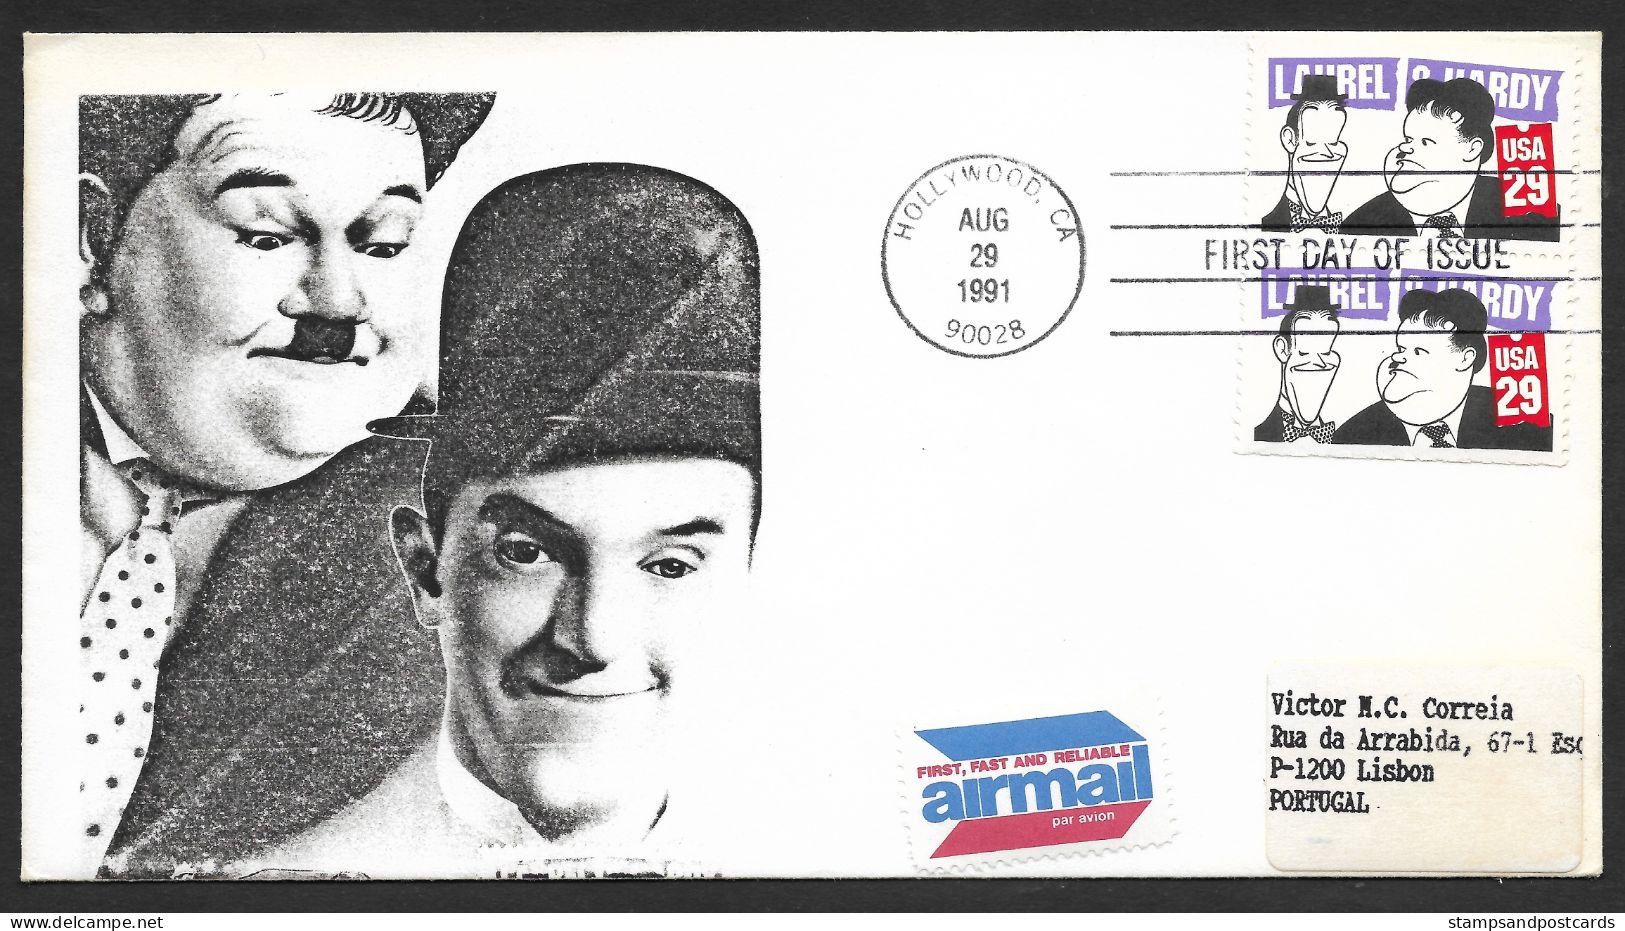 Etats Unis Cachet Commémoratif Laurel And Hardy Cinema 1991 Event Postmark United States US Movies - Cinema